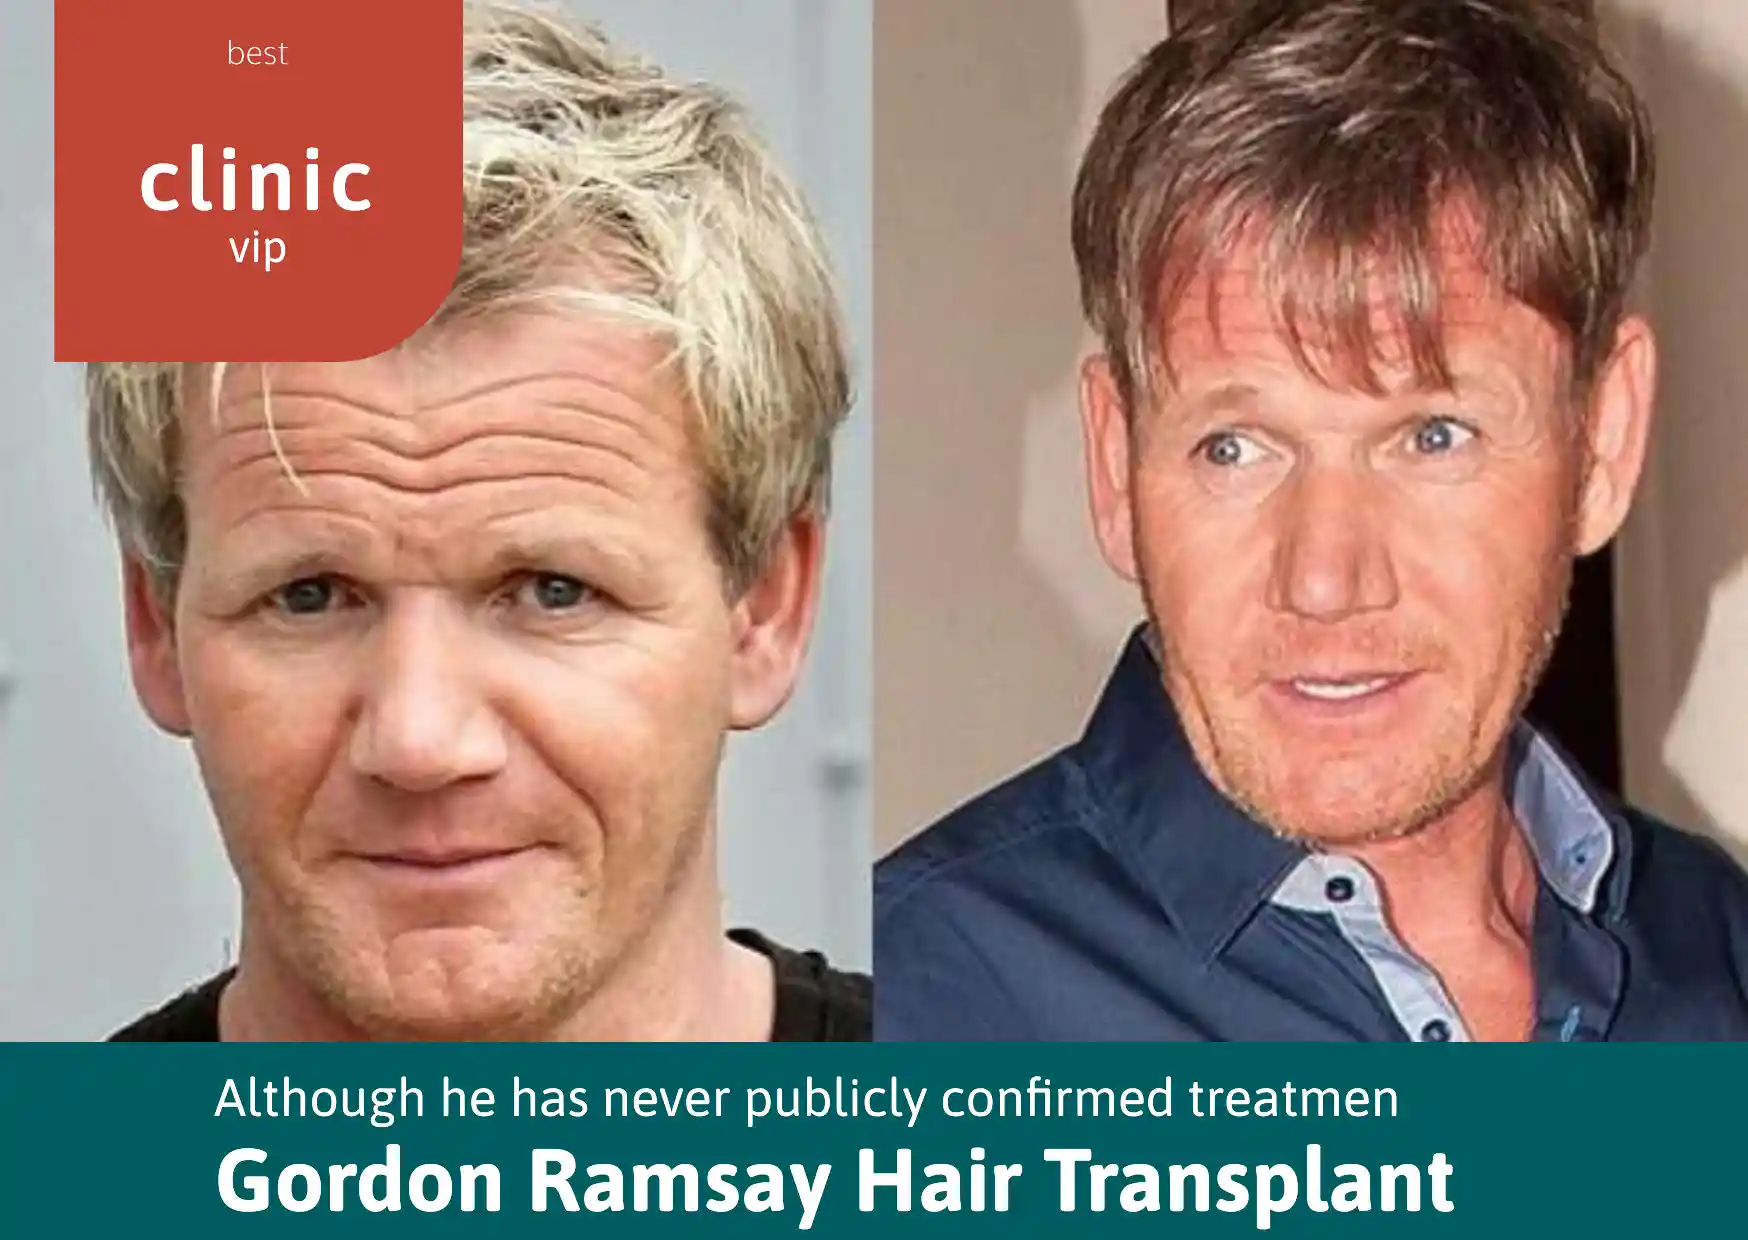 Gordon Ramsay Hair Transplant